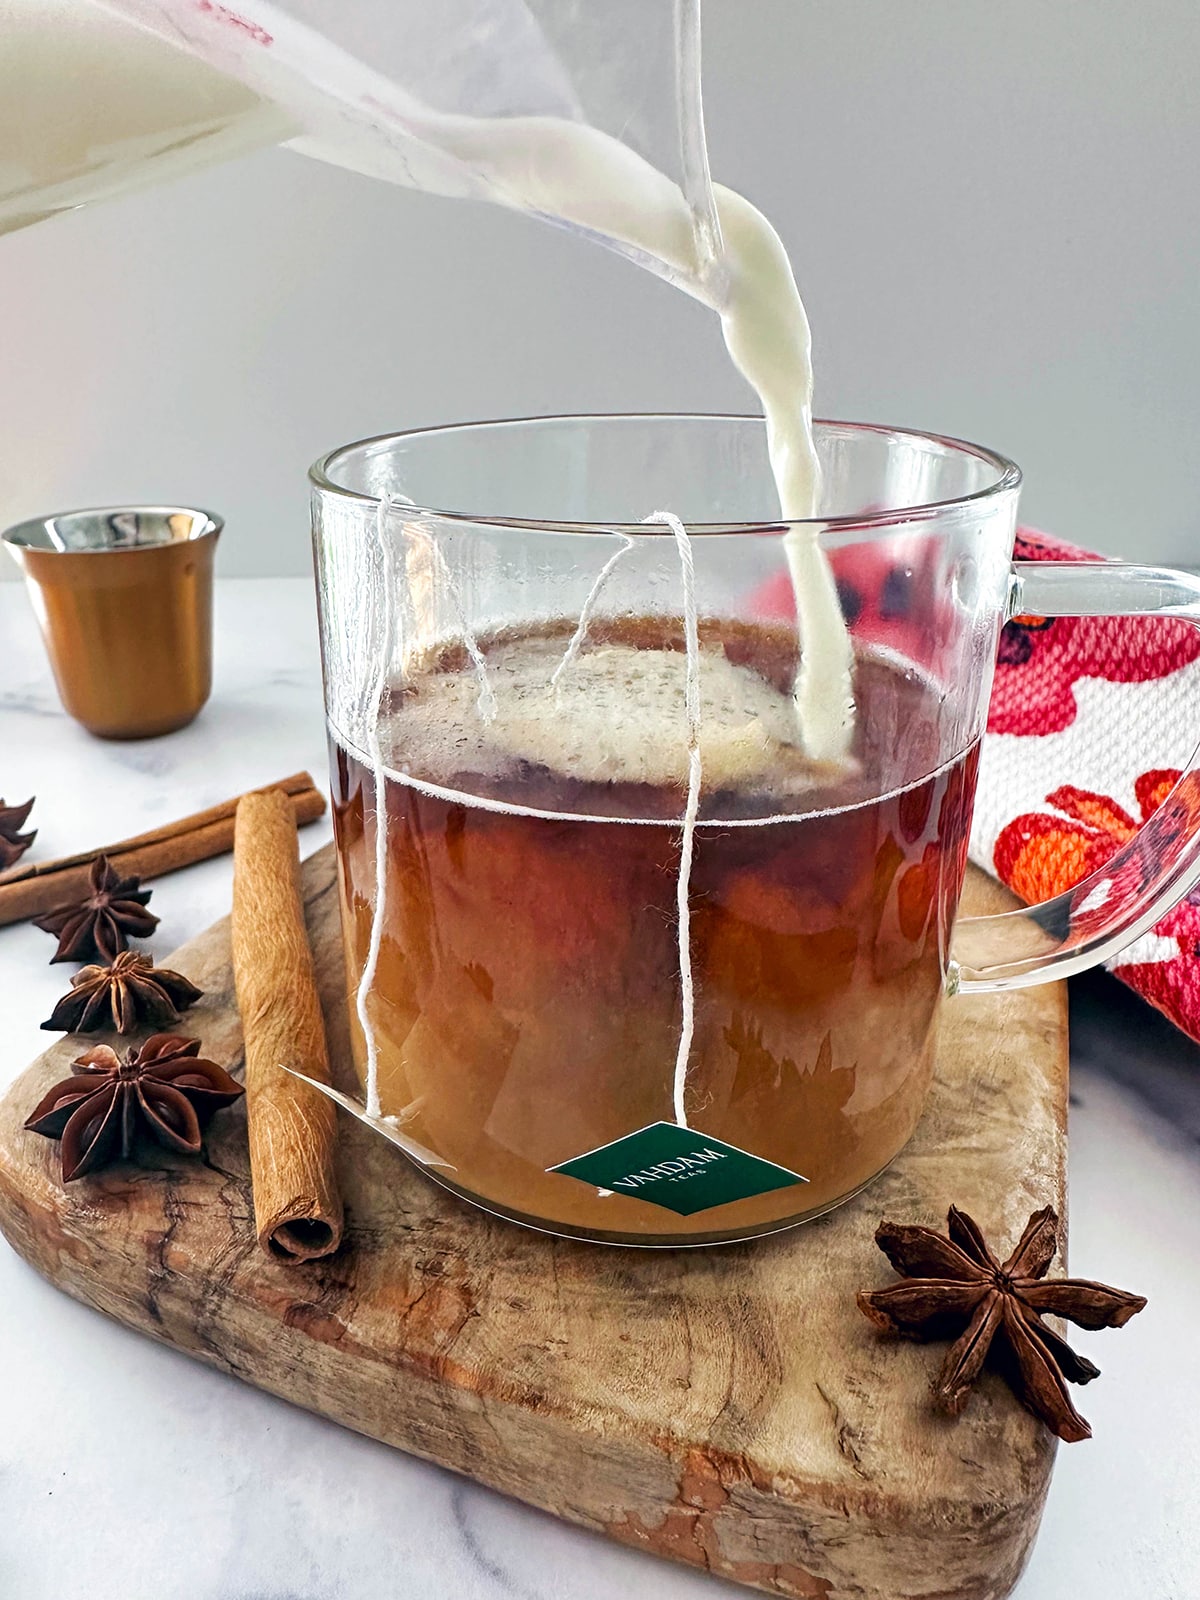 Steamed milk being poured into glass mug of chai tea and espresso.